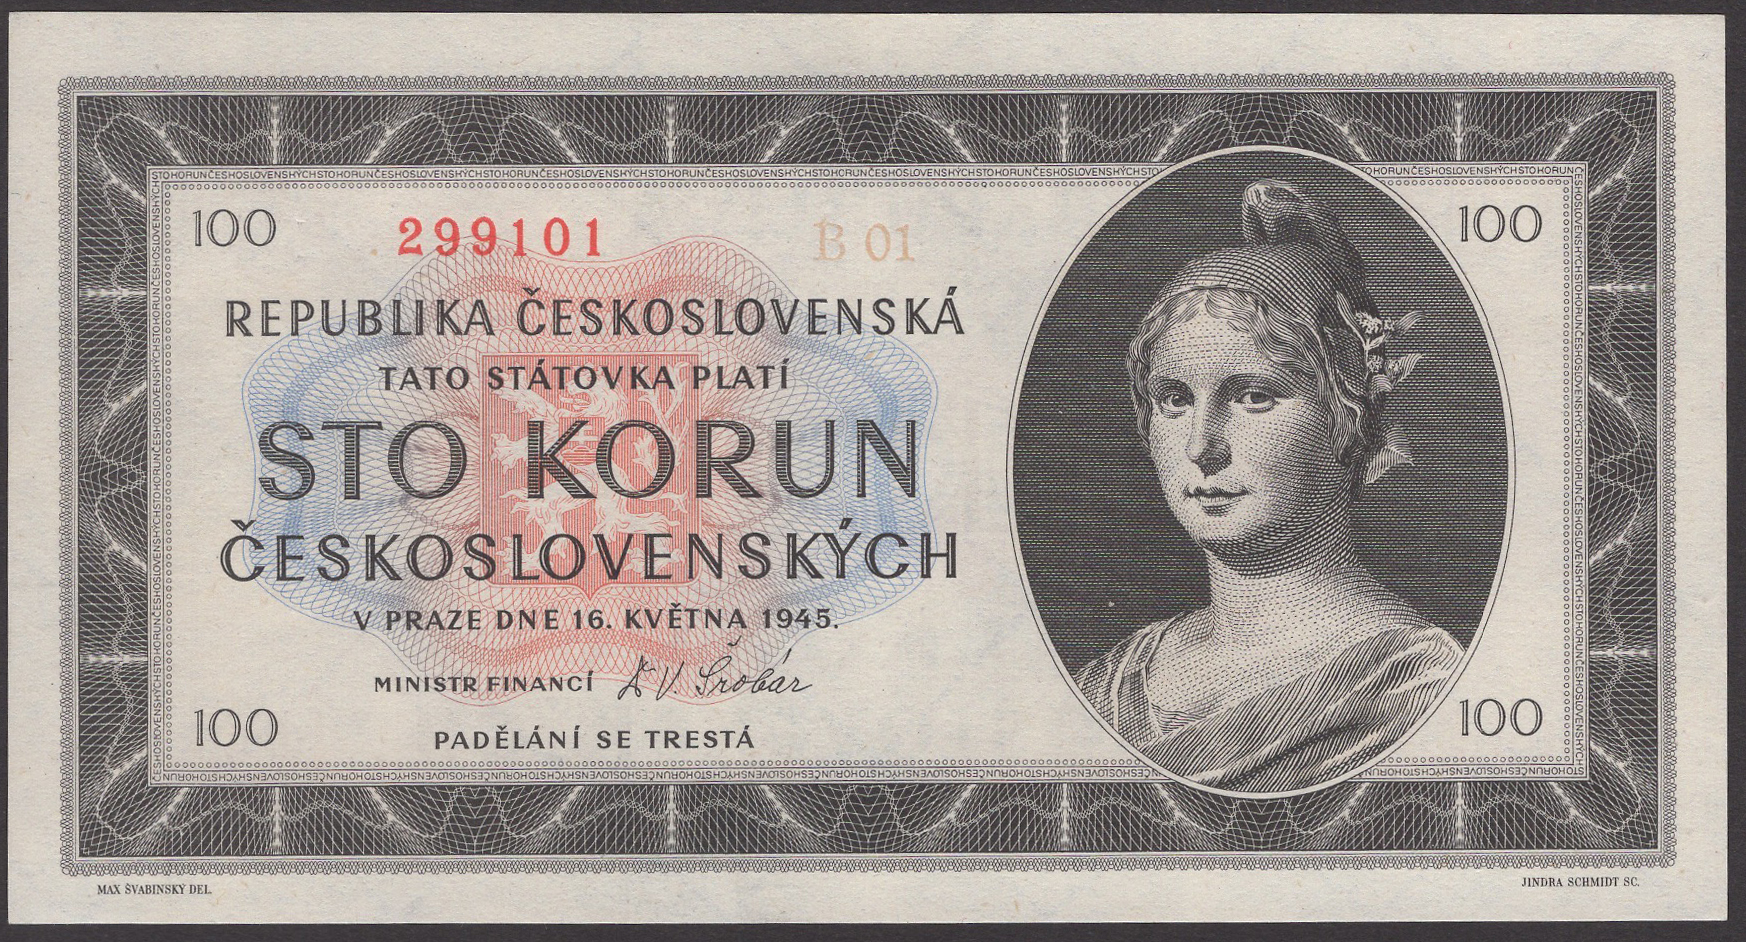 Republika Ceskoslovenska, 50 Korun (2), 1948, serial numbers A48 080411-12, also 100 Korun... - Image 3 of 4